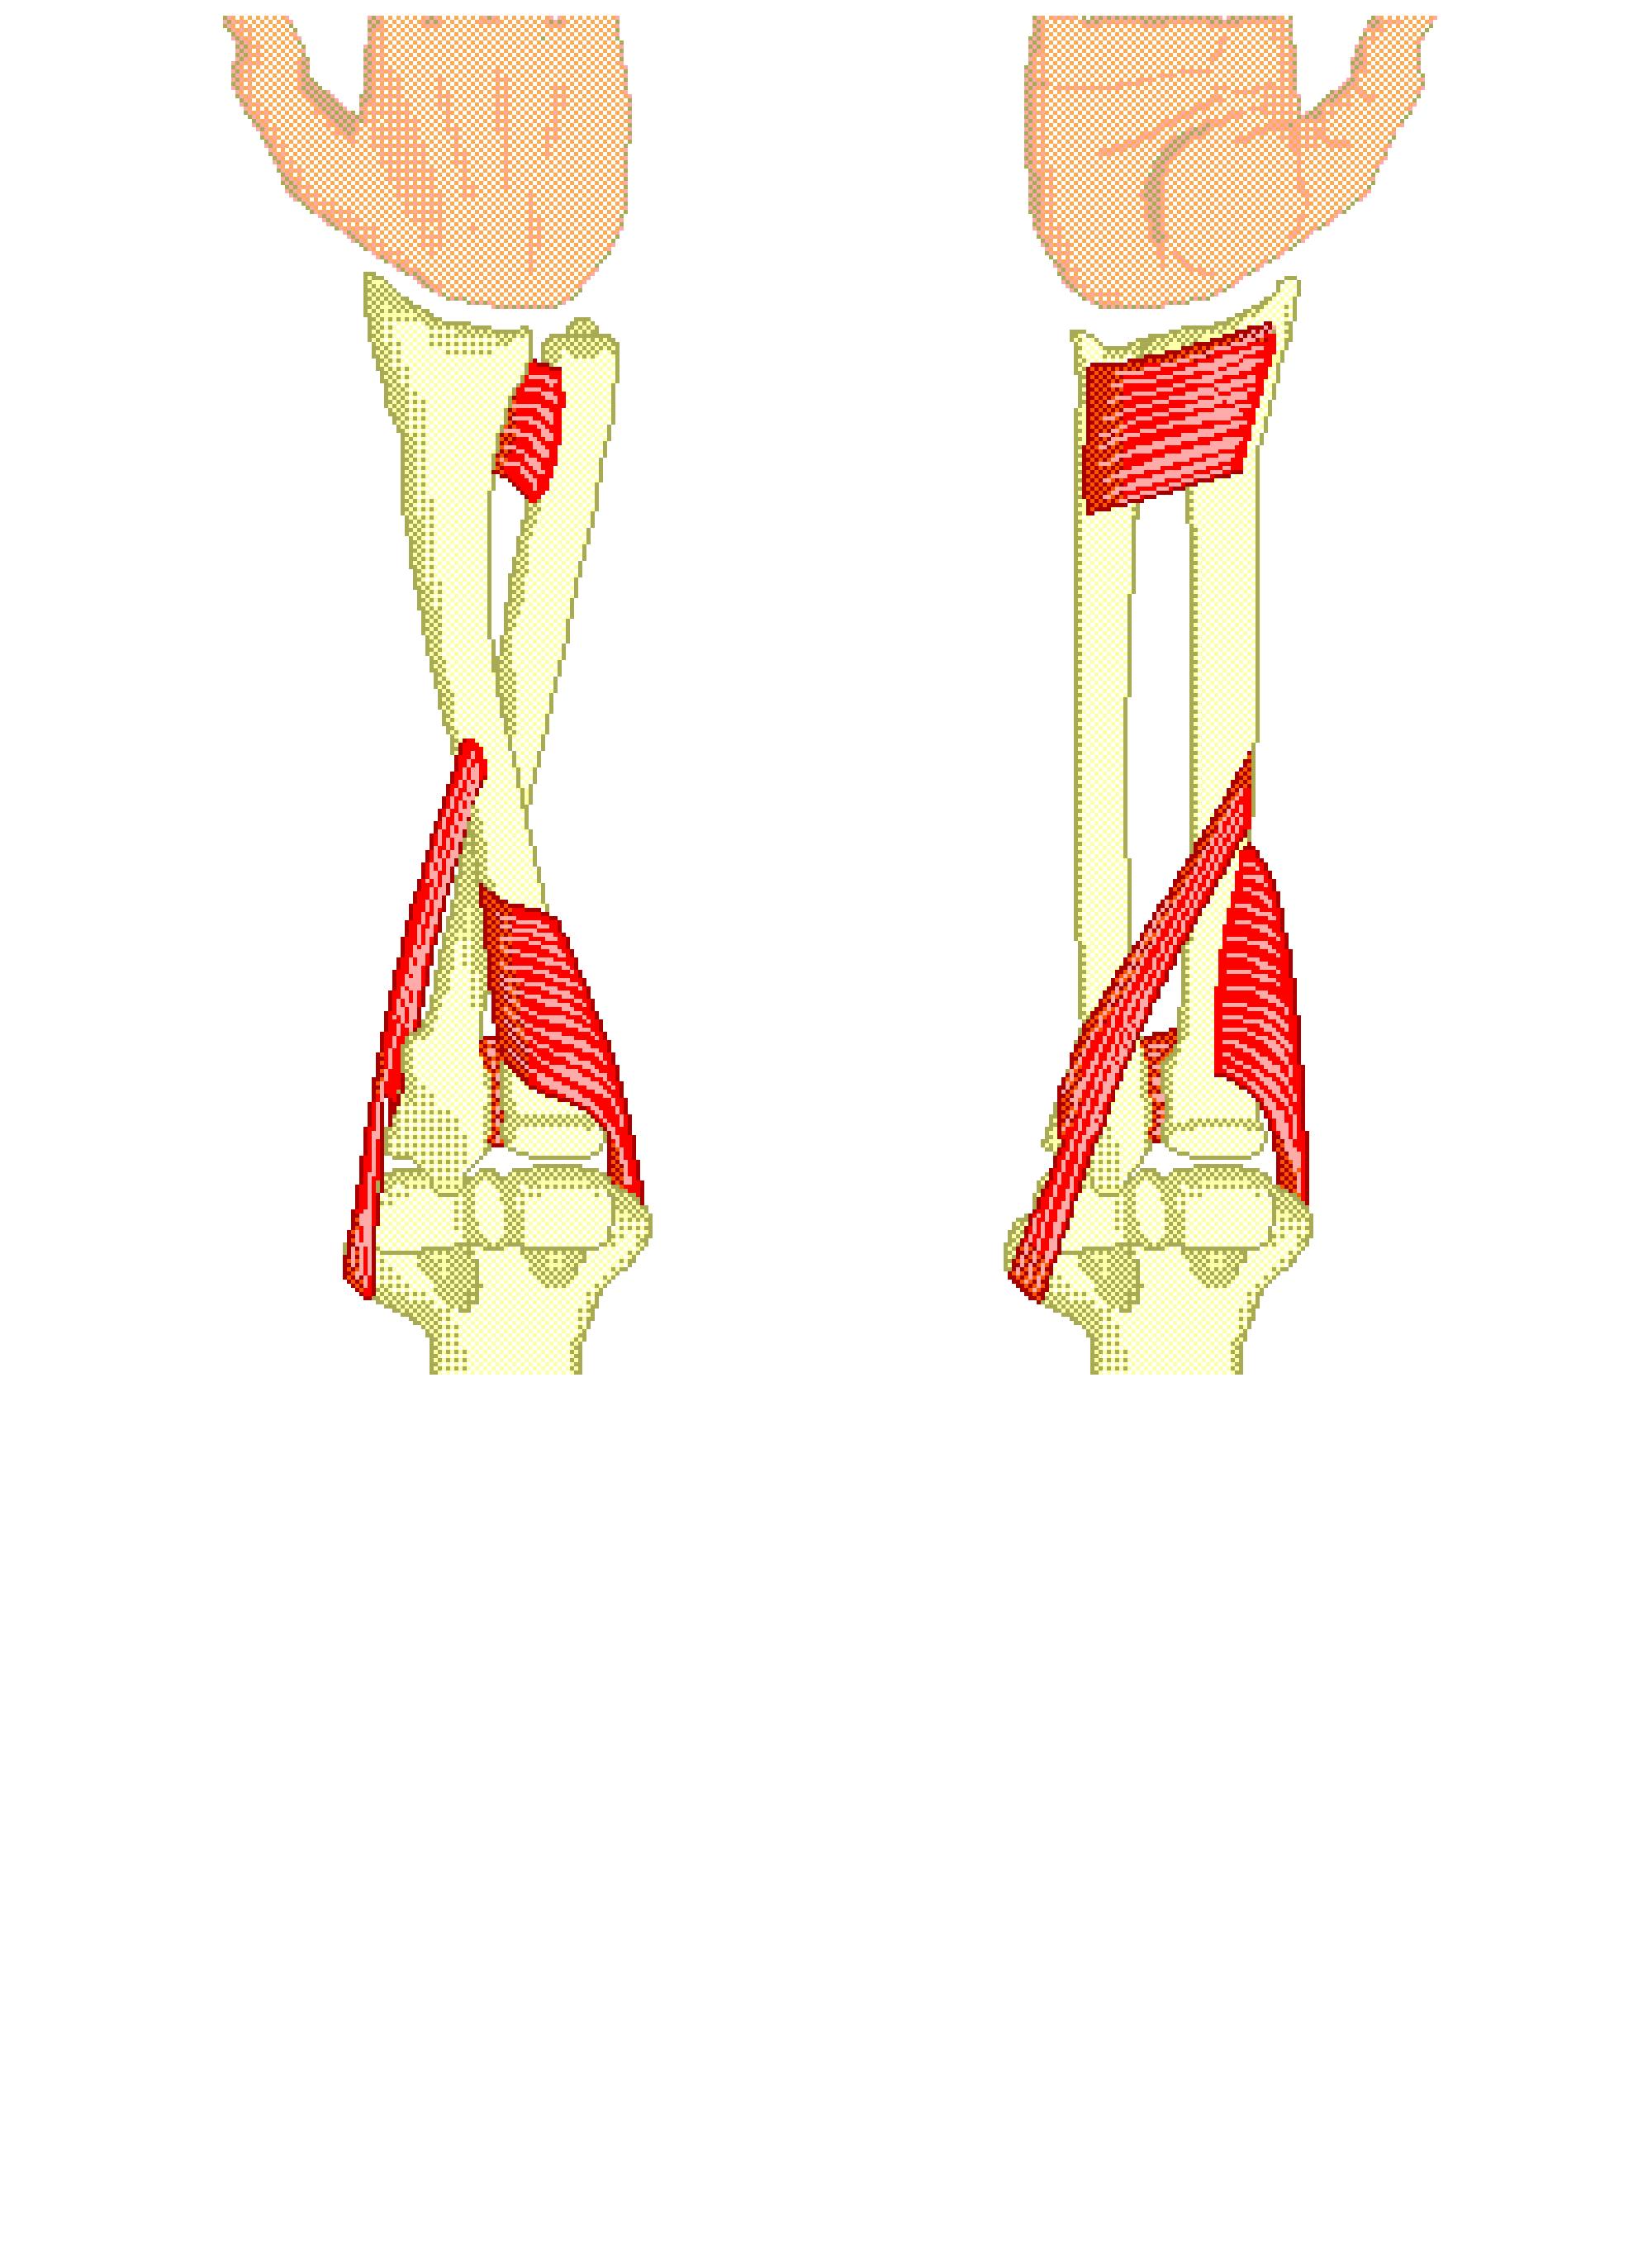 Forearm Pronation & Supination: Muscles, Bones, & Joints